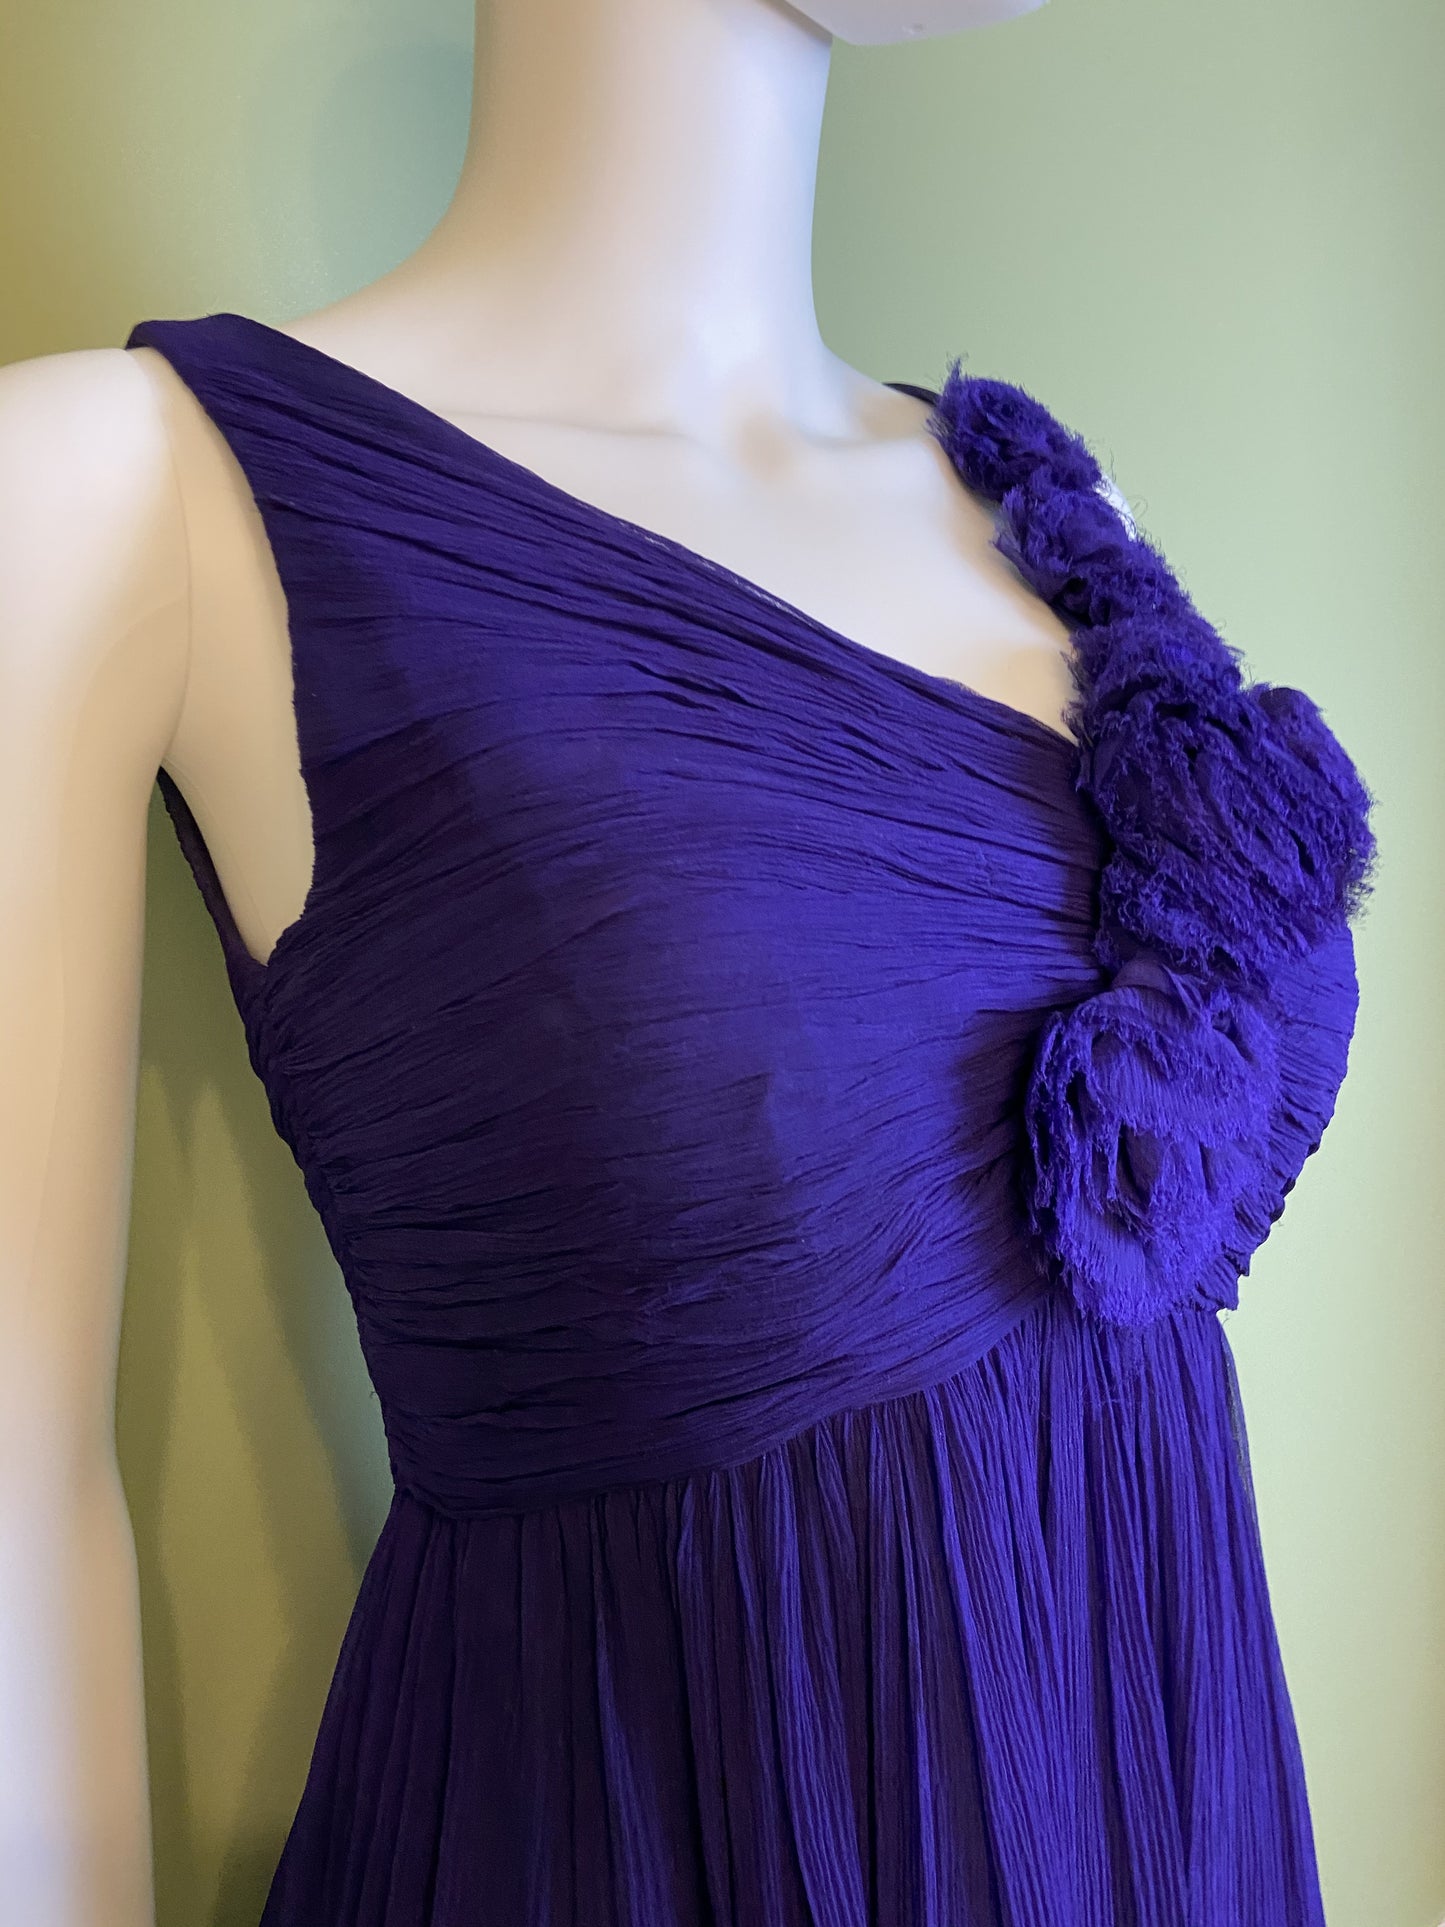 Maggy London Purple Silk Pleated Asymetrical Dress